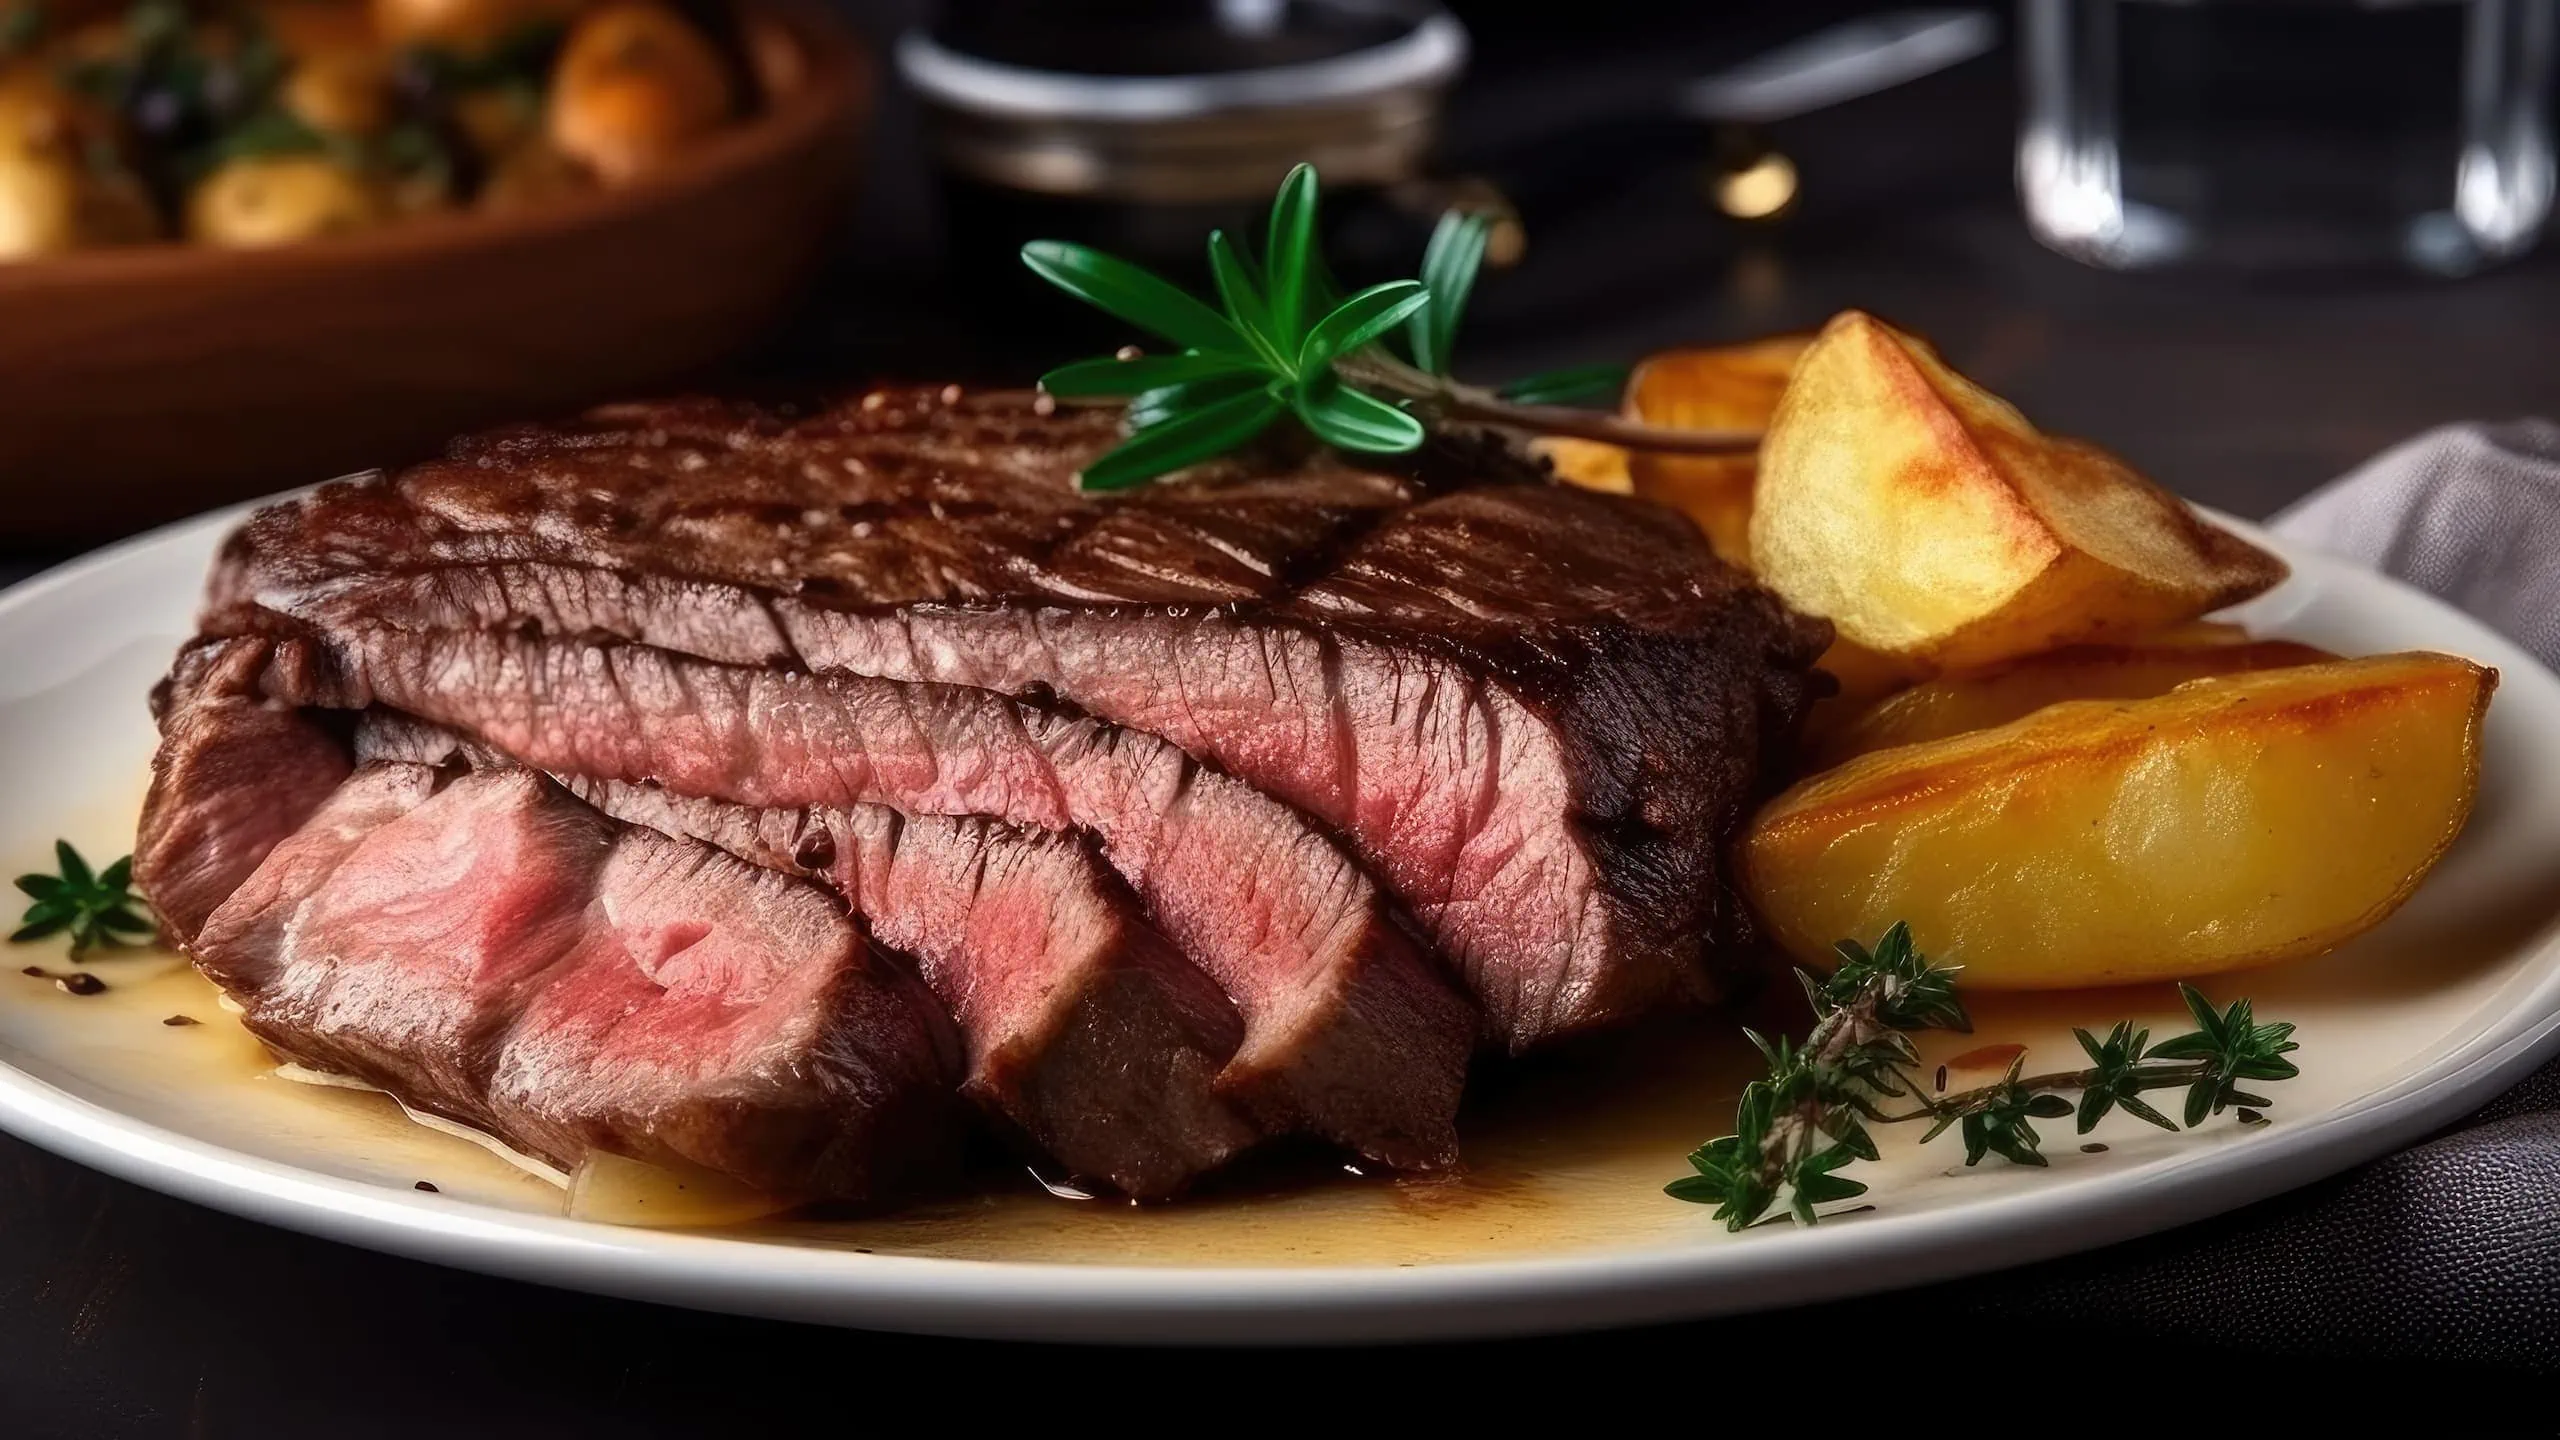 Plate with juicy Cardiff crack recipe steak